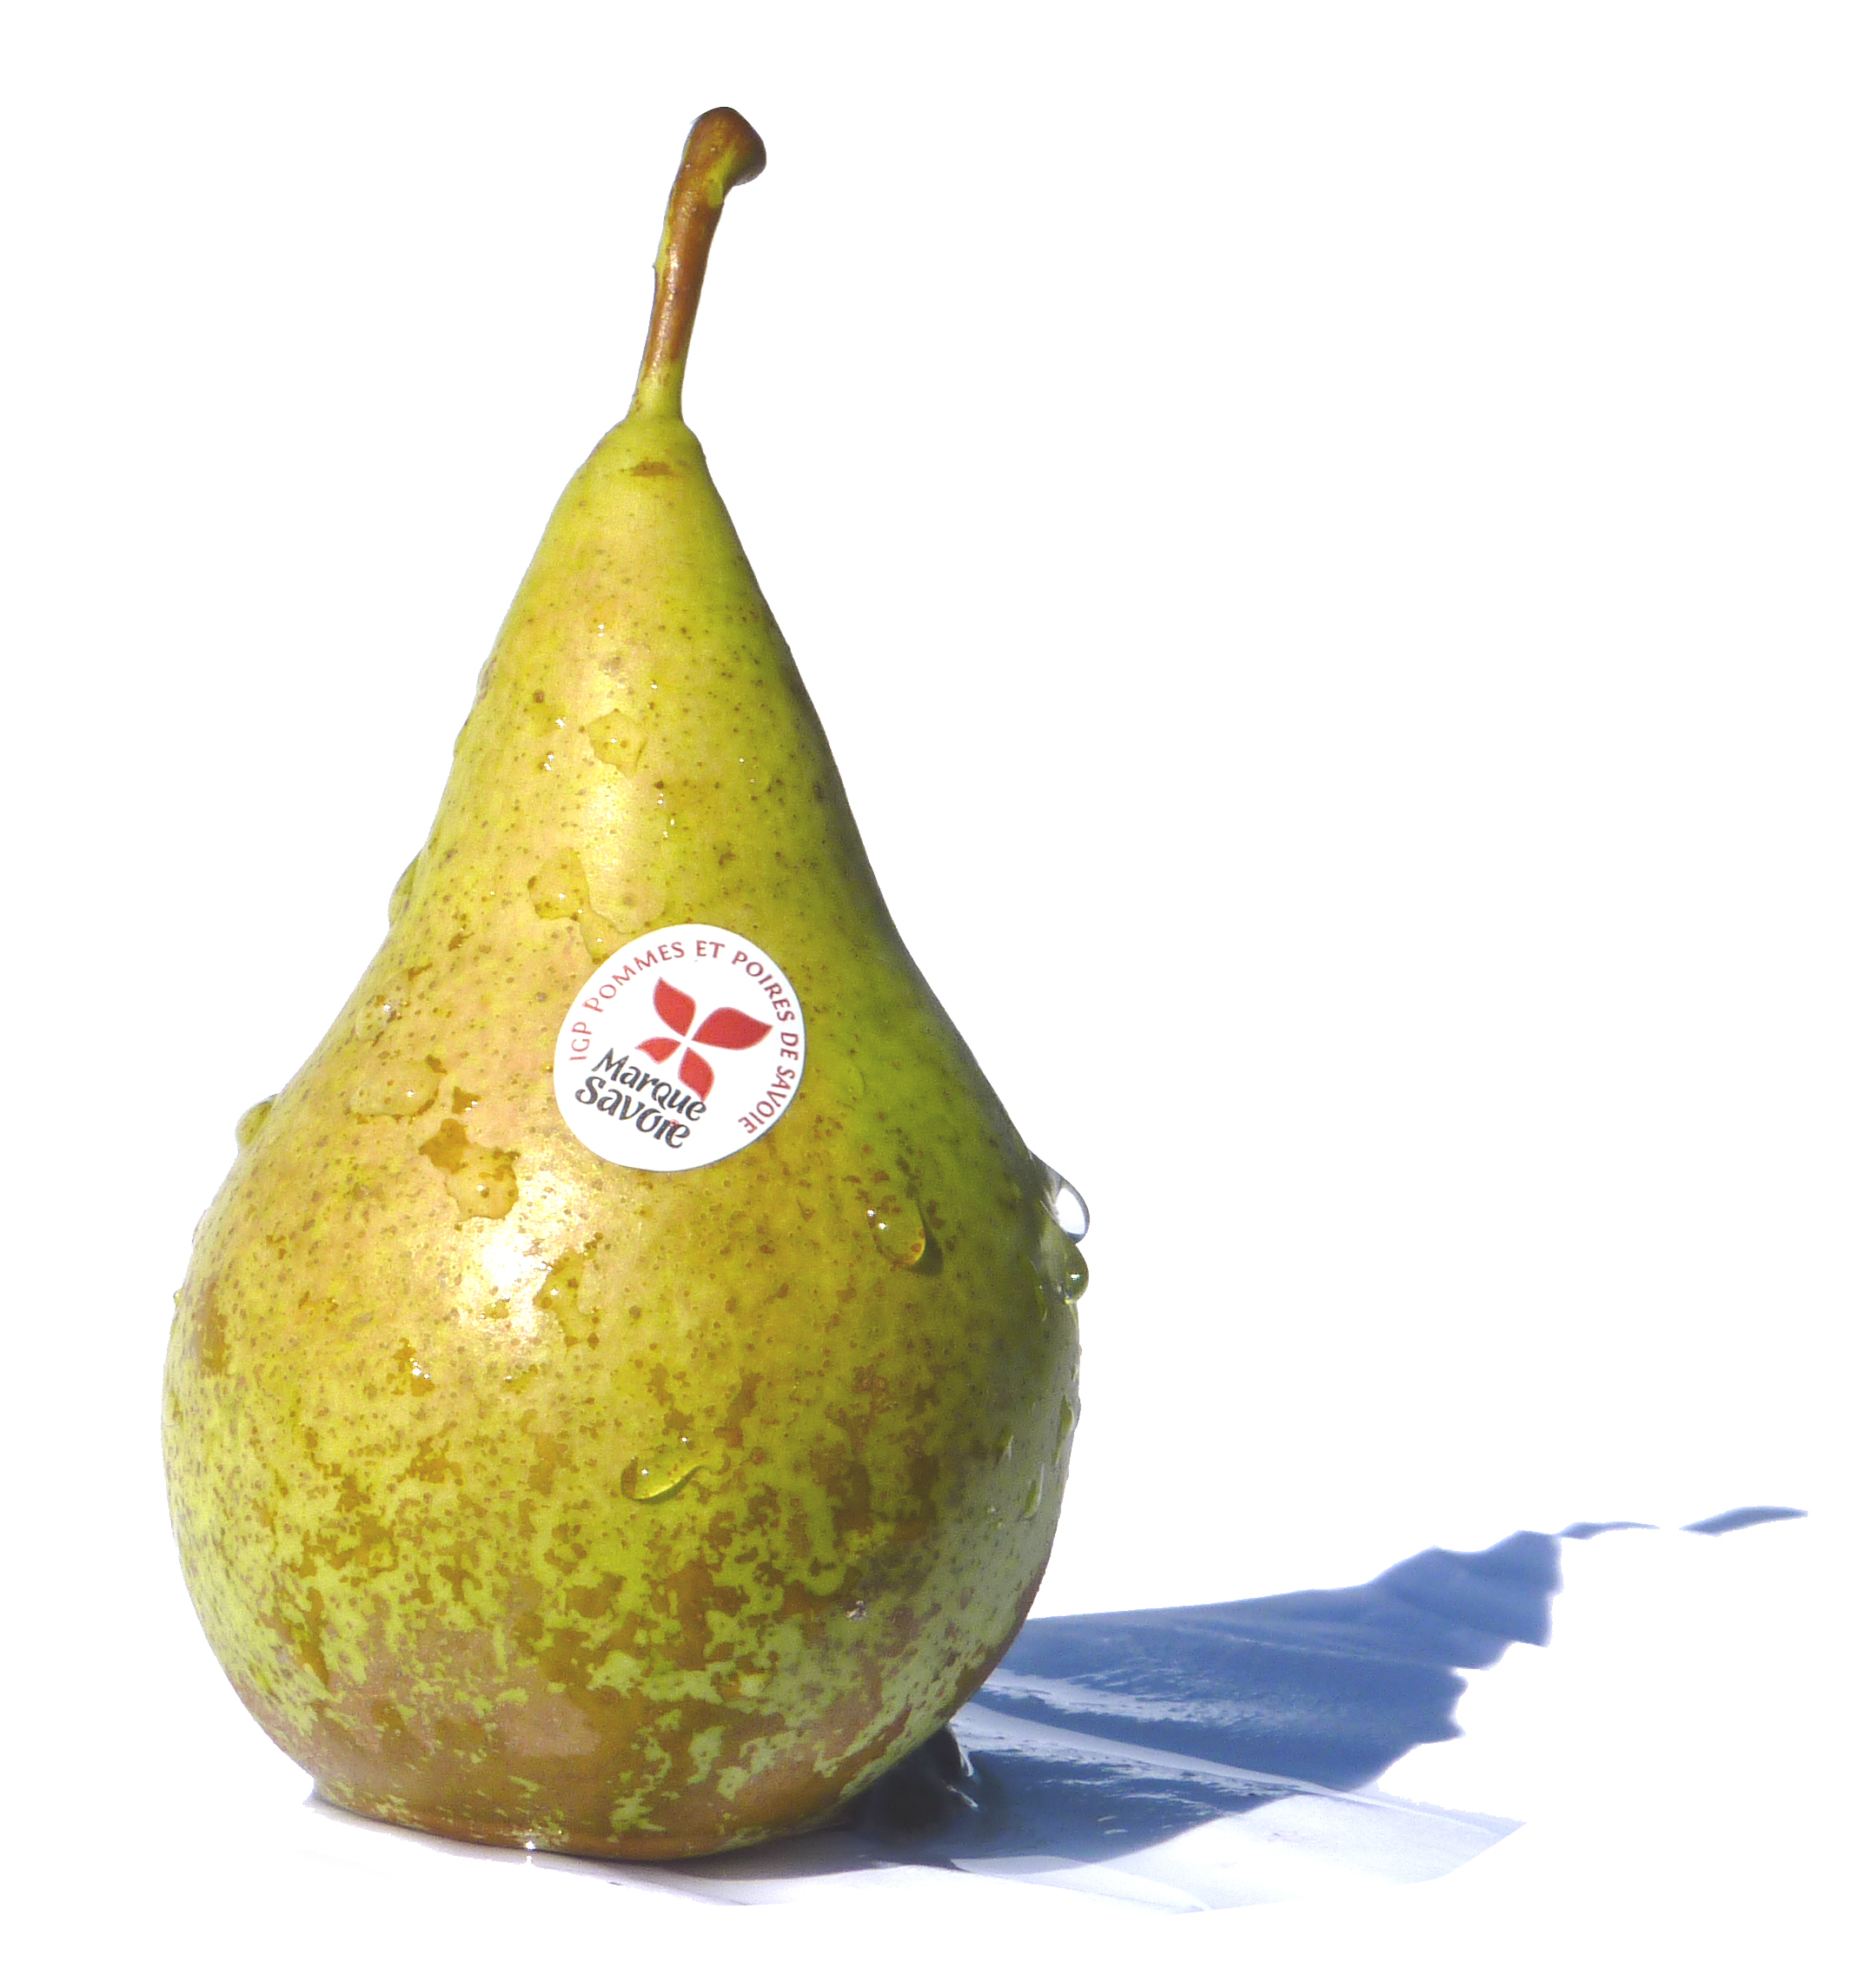 Conference pear - Wikipedia